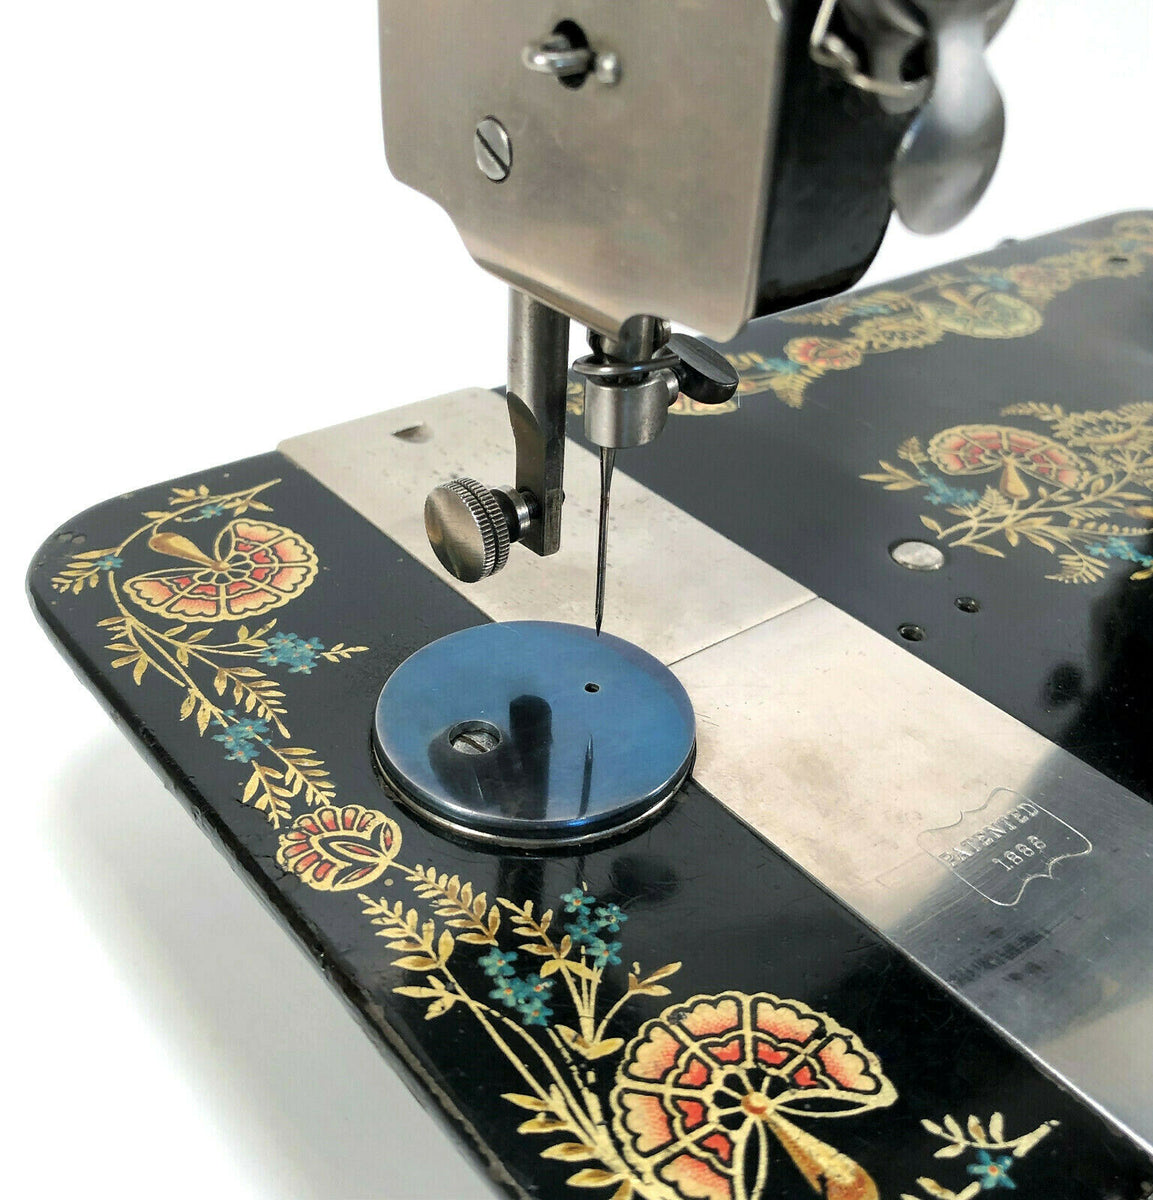 singer heavy duty sewing machine Art Board Print for Sale by aninak21